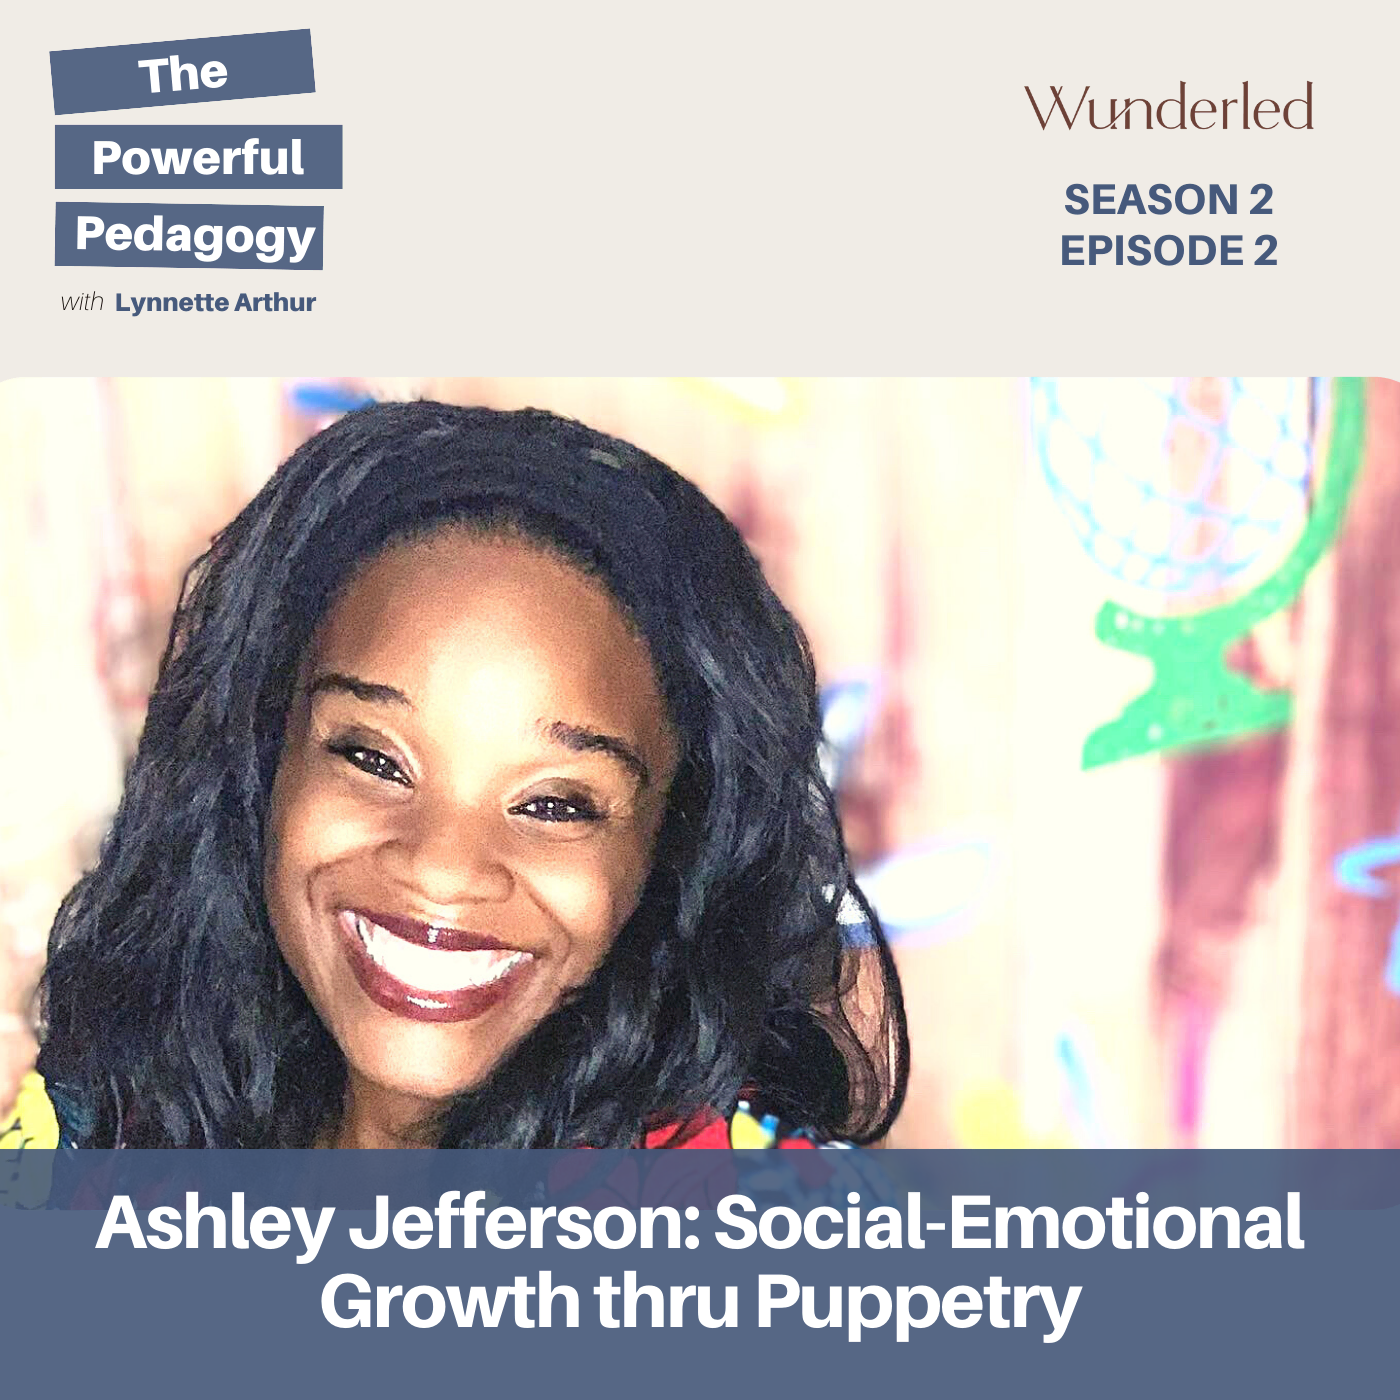 Ashley Jefferson: Social-Emotional Growth thru Puppetry